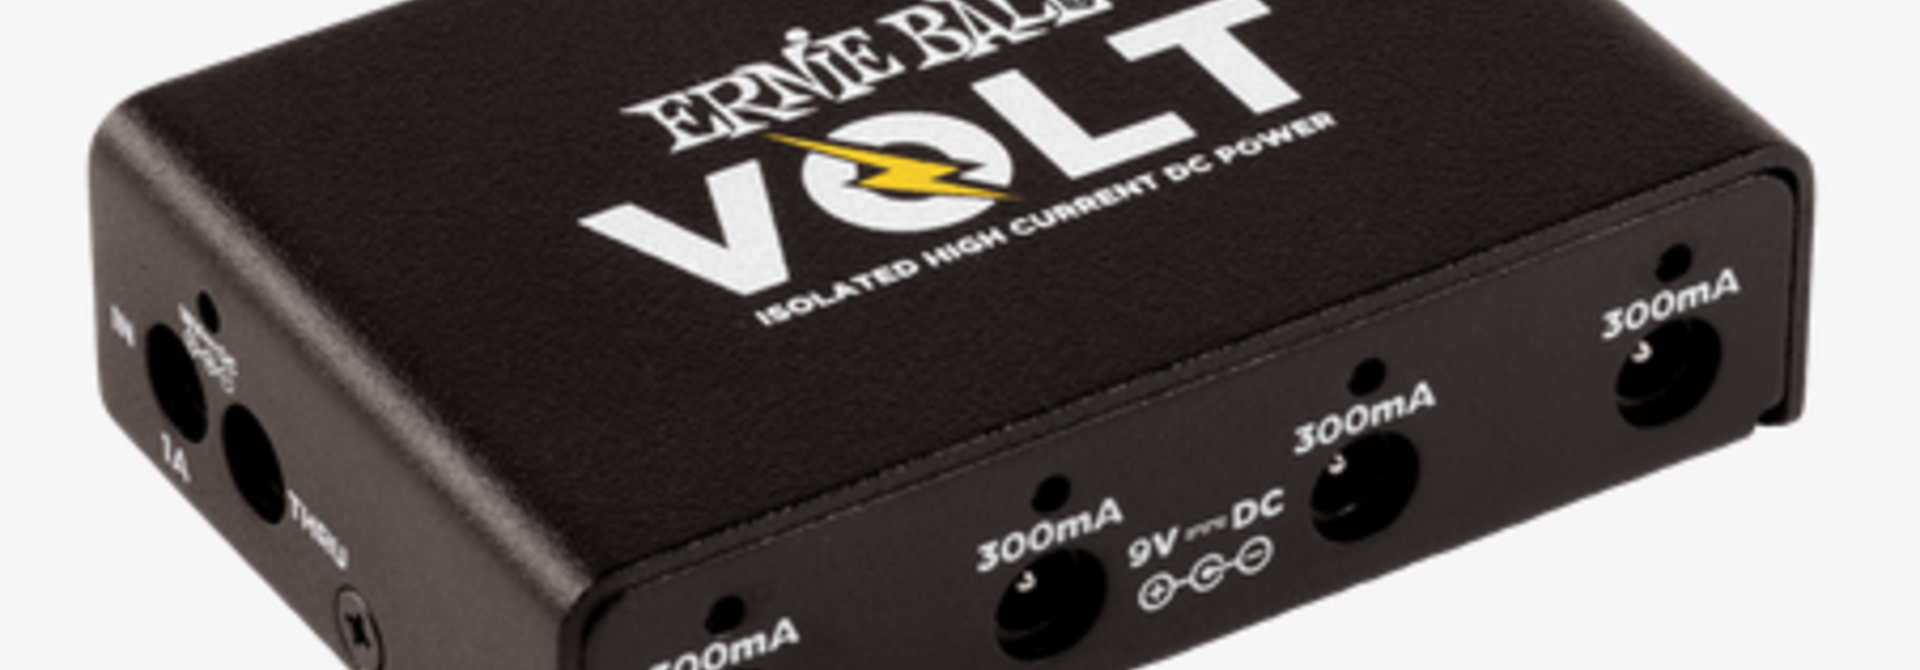 Ernie Ball Volt Power supply